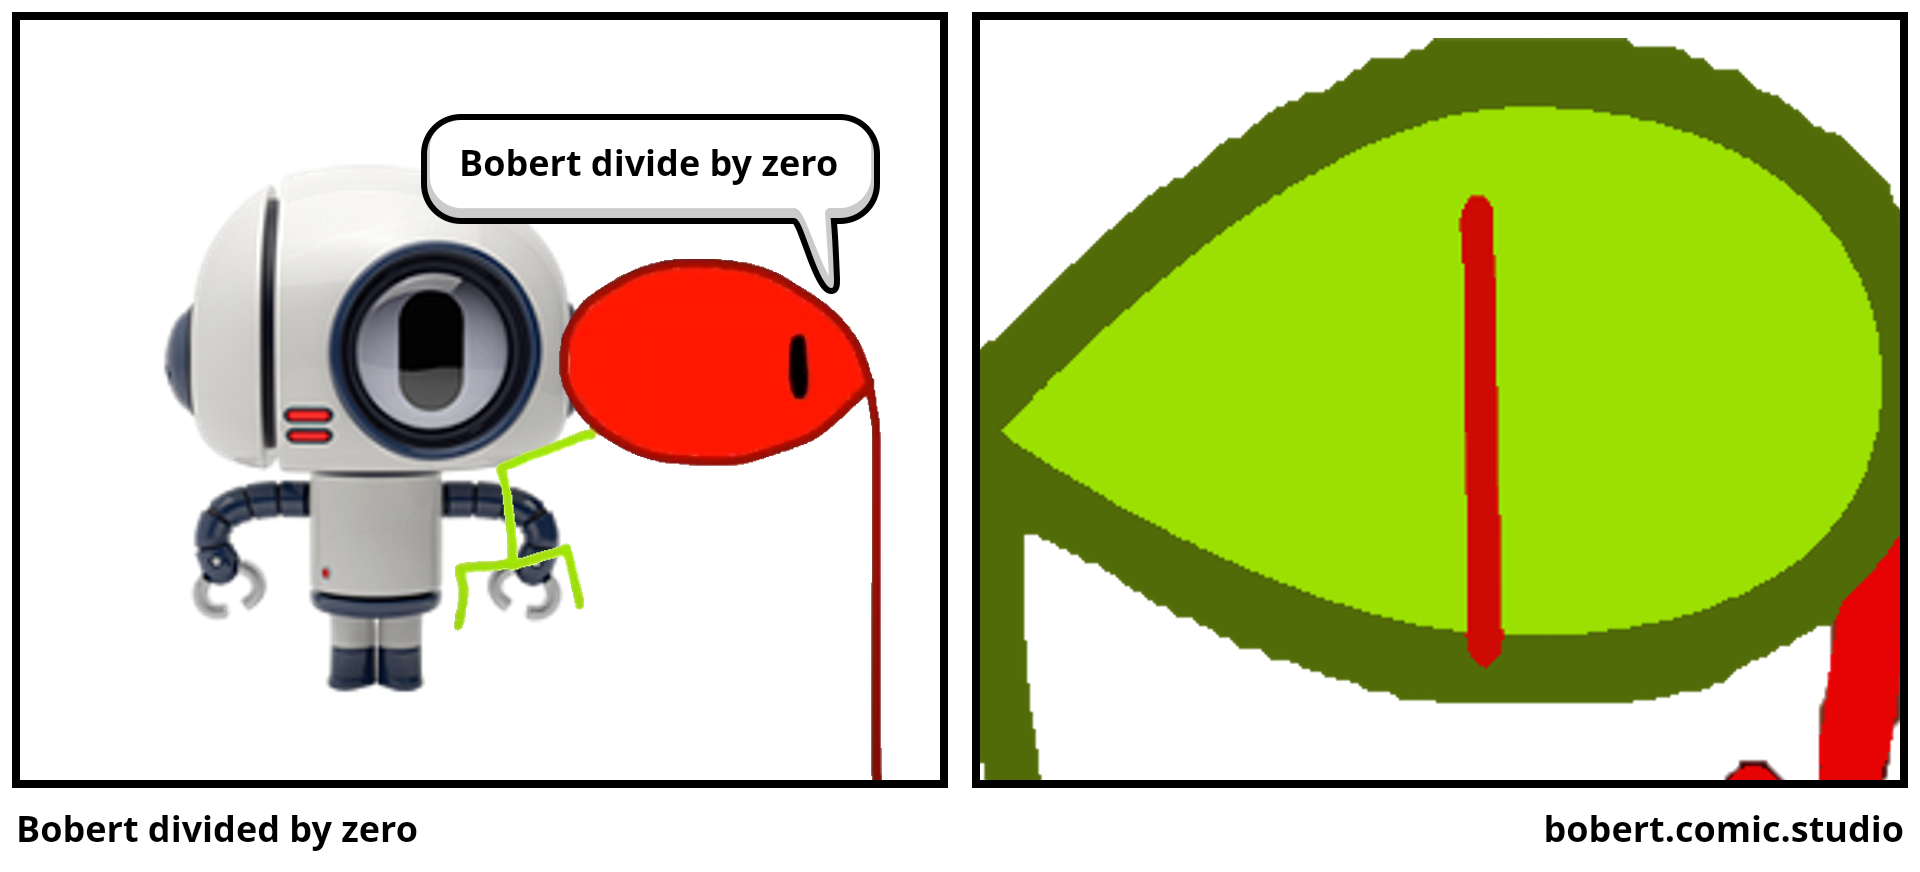 Bobert divided by zero